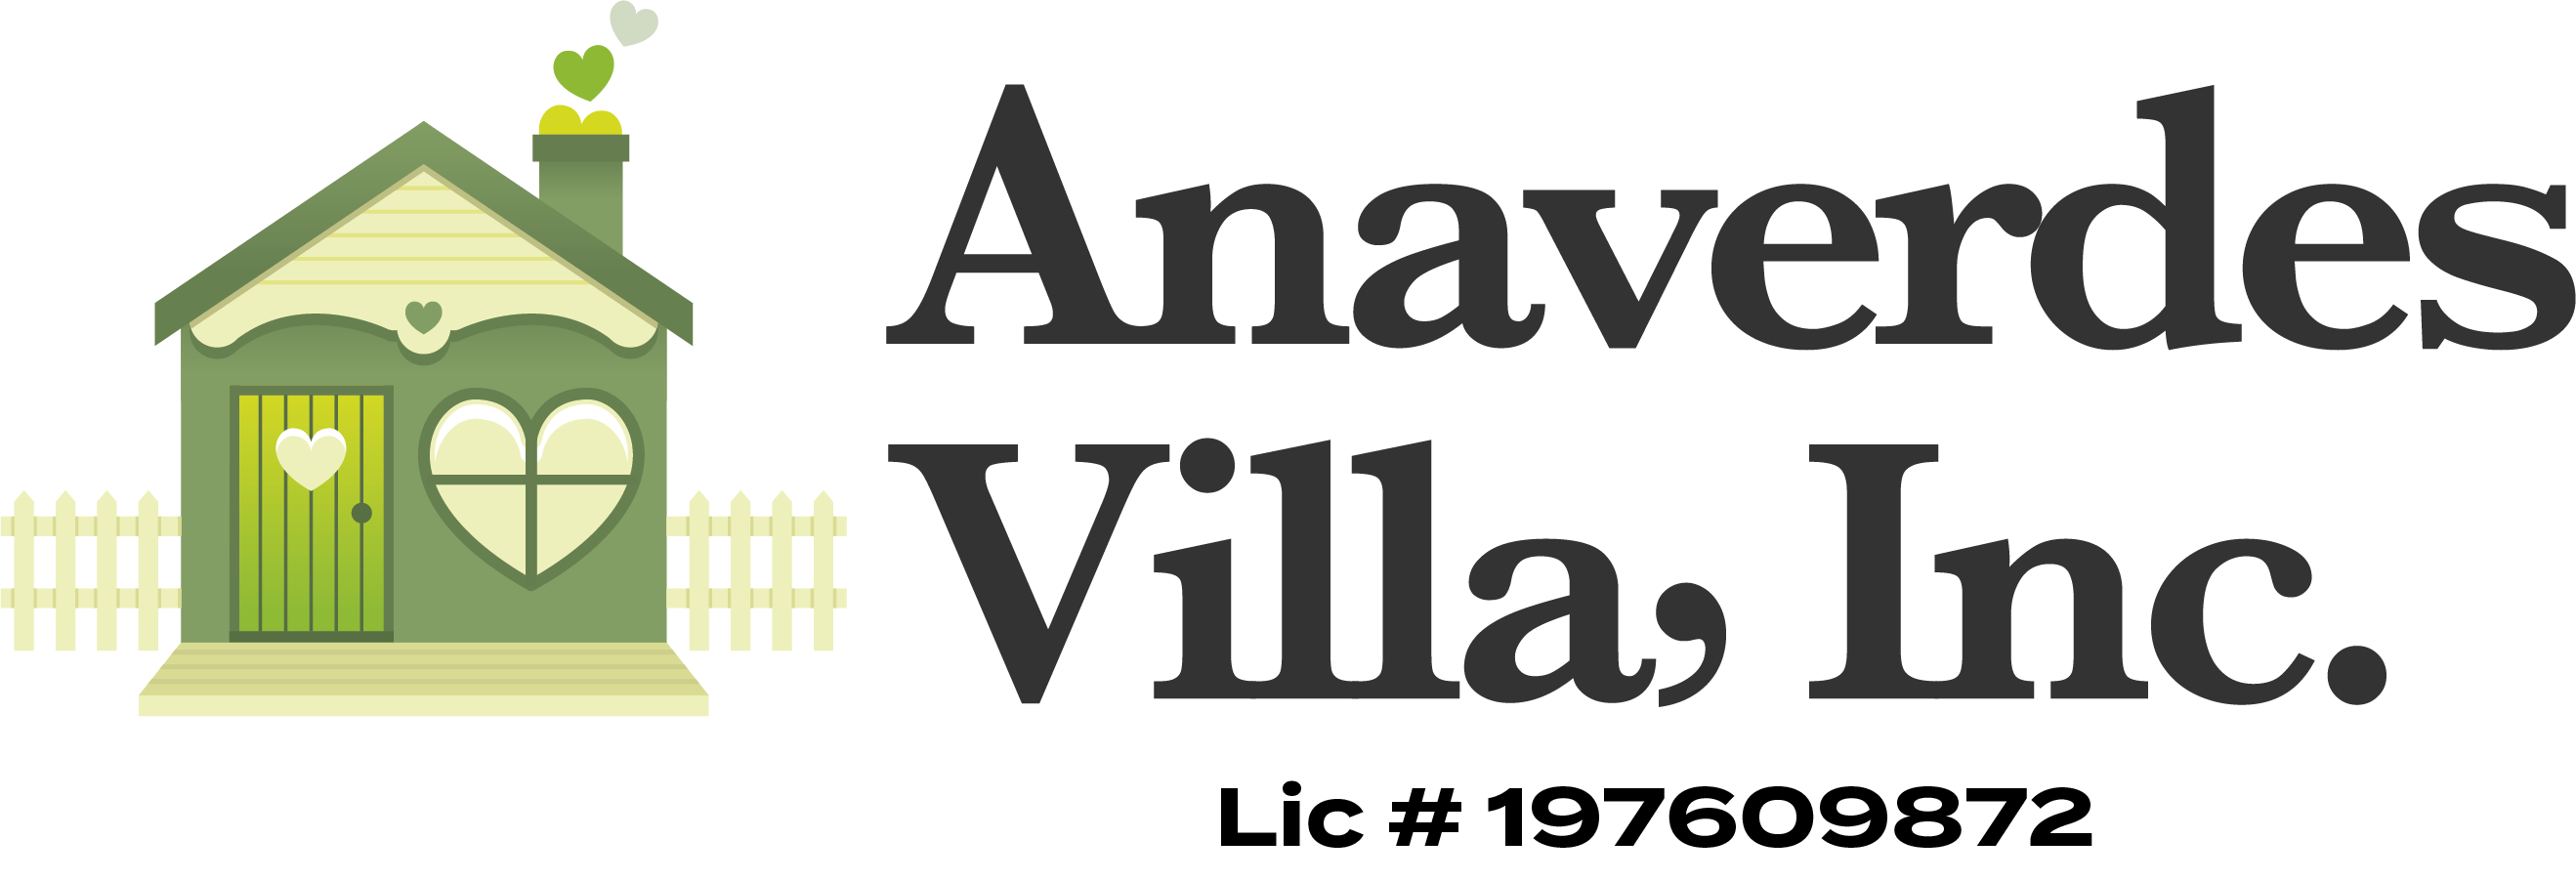 Anaverdes Villa, Inc.